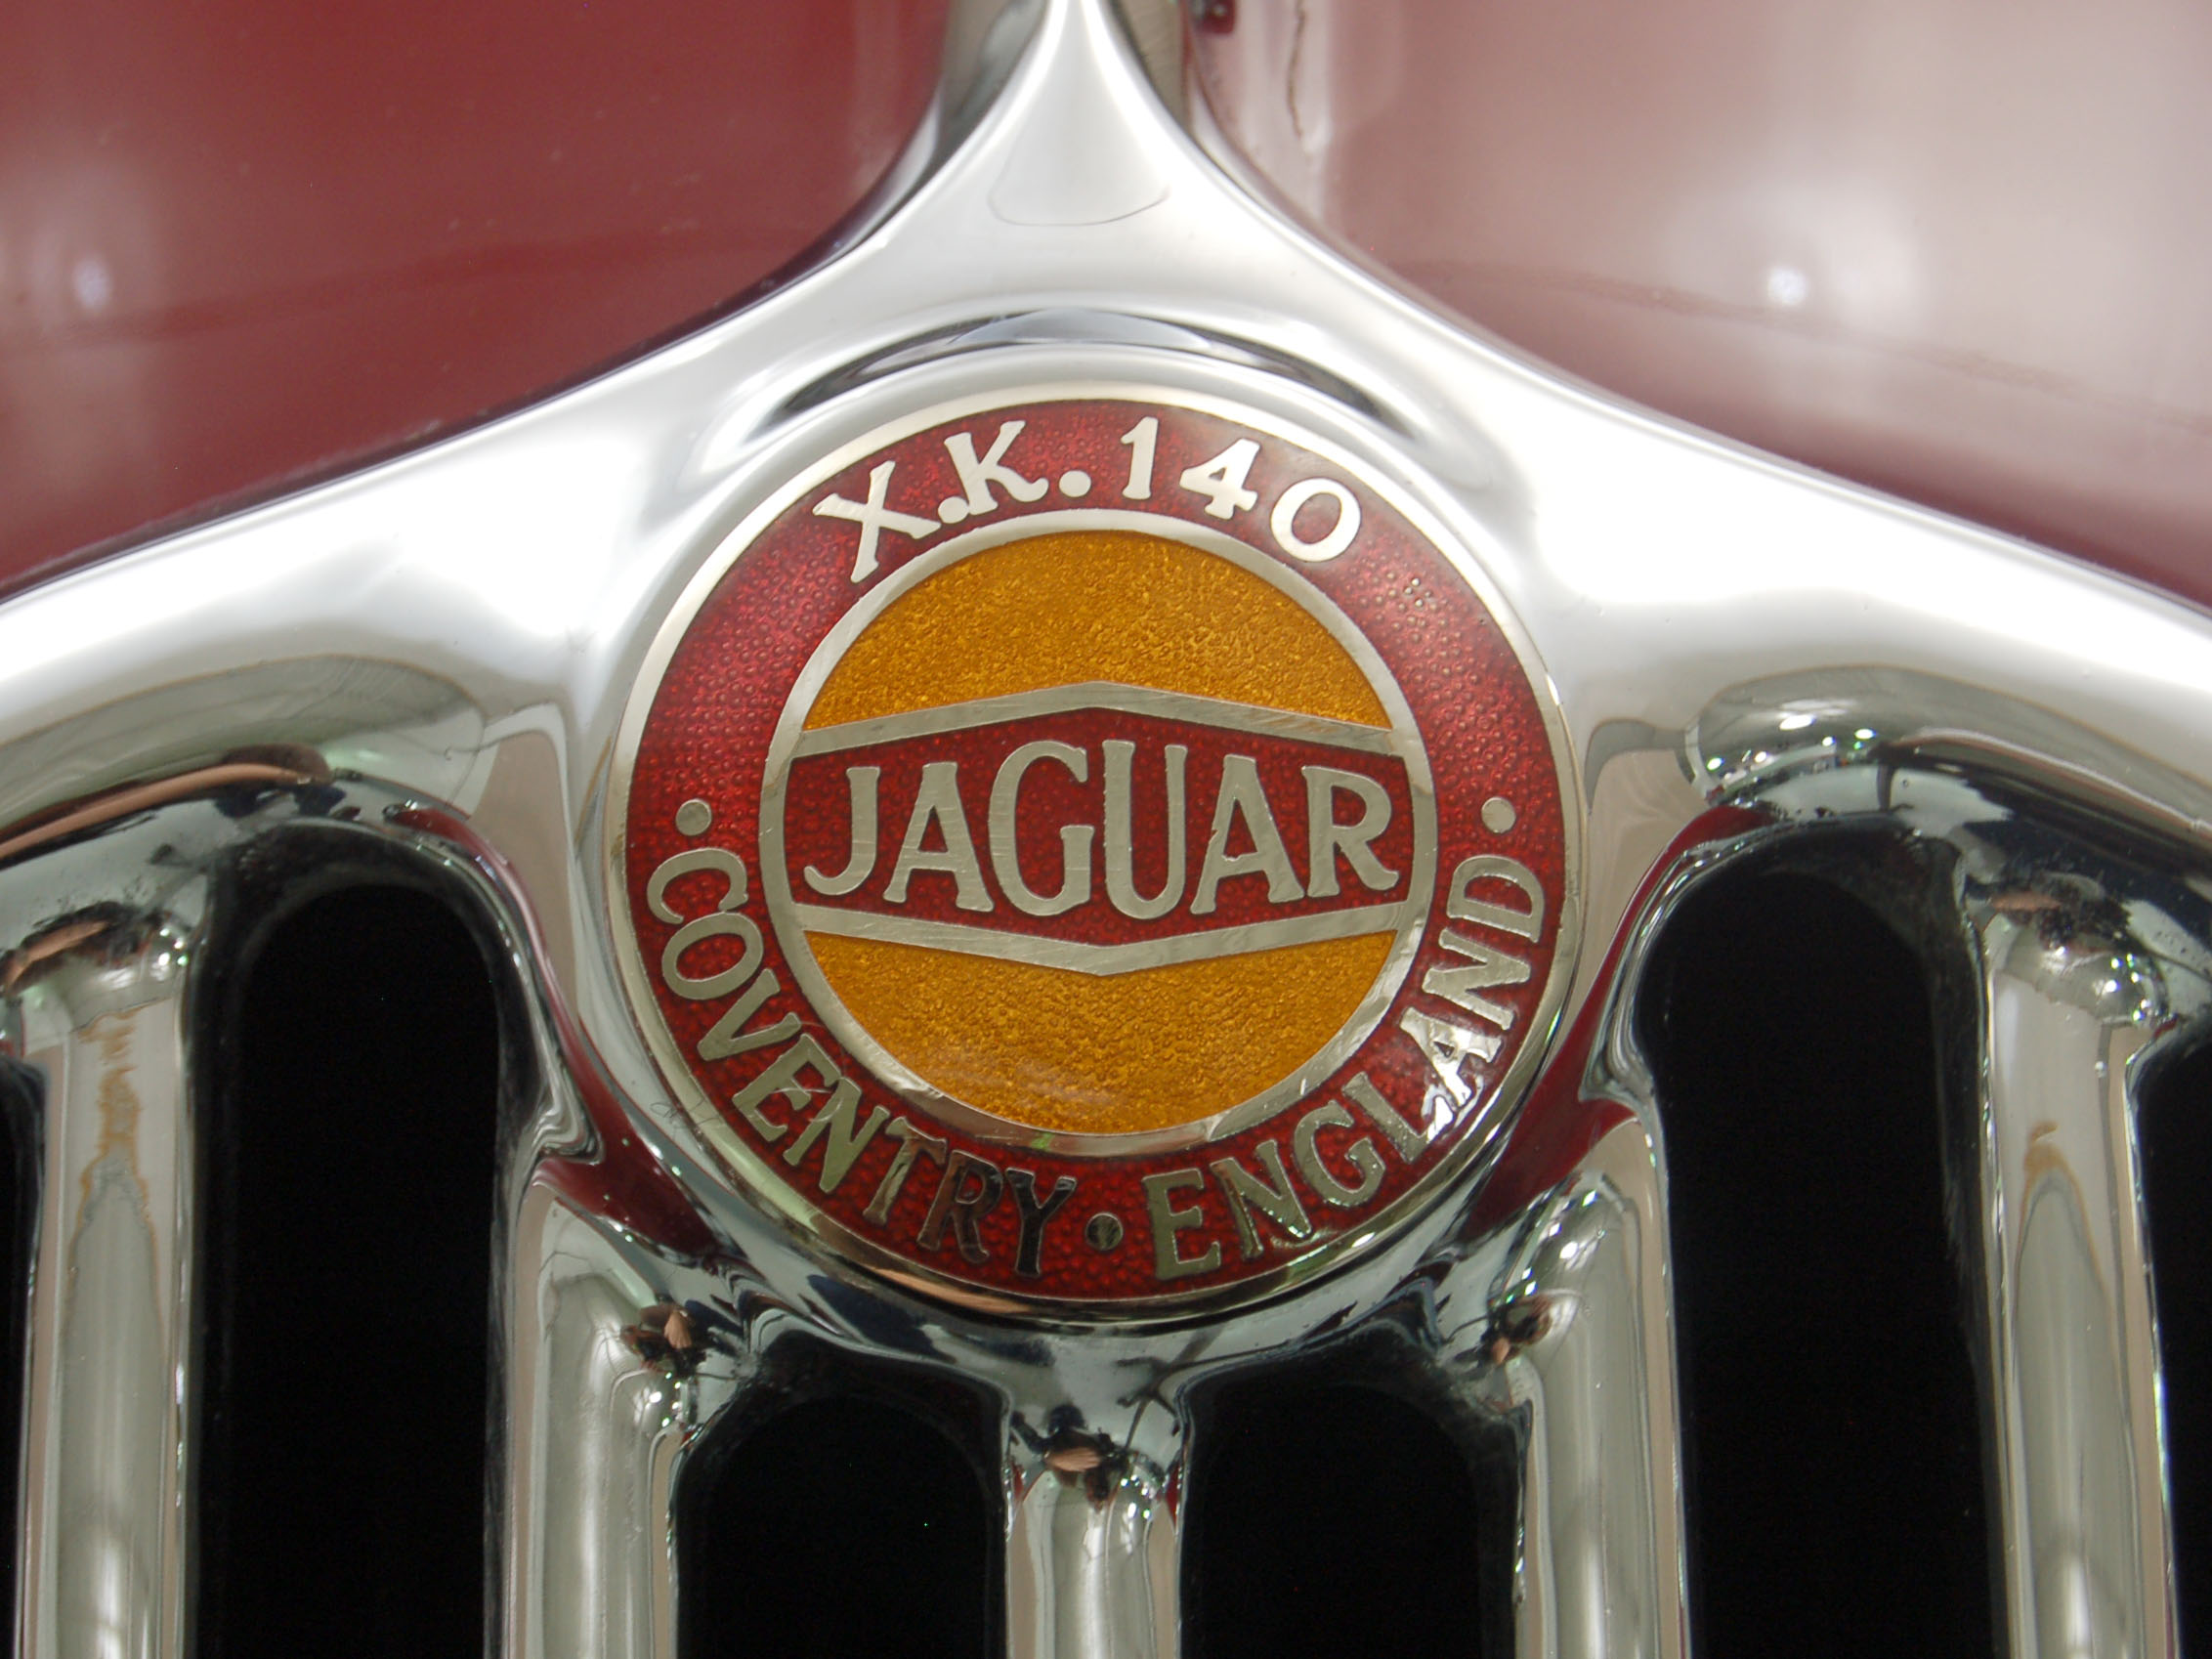 1957 jaguar xk 140 mc